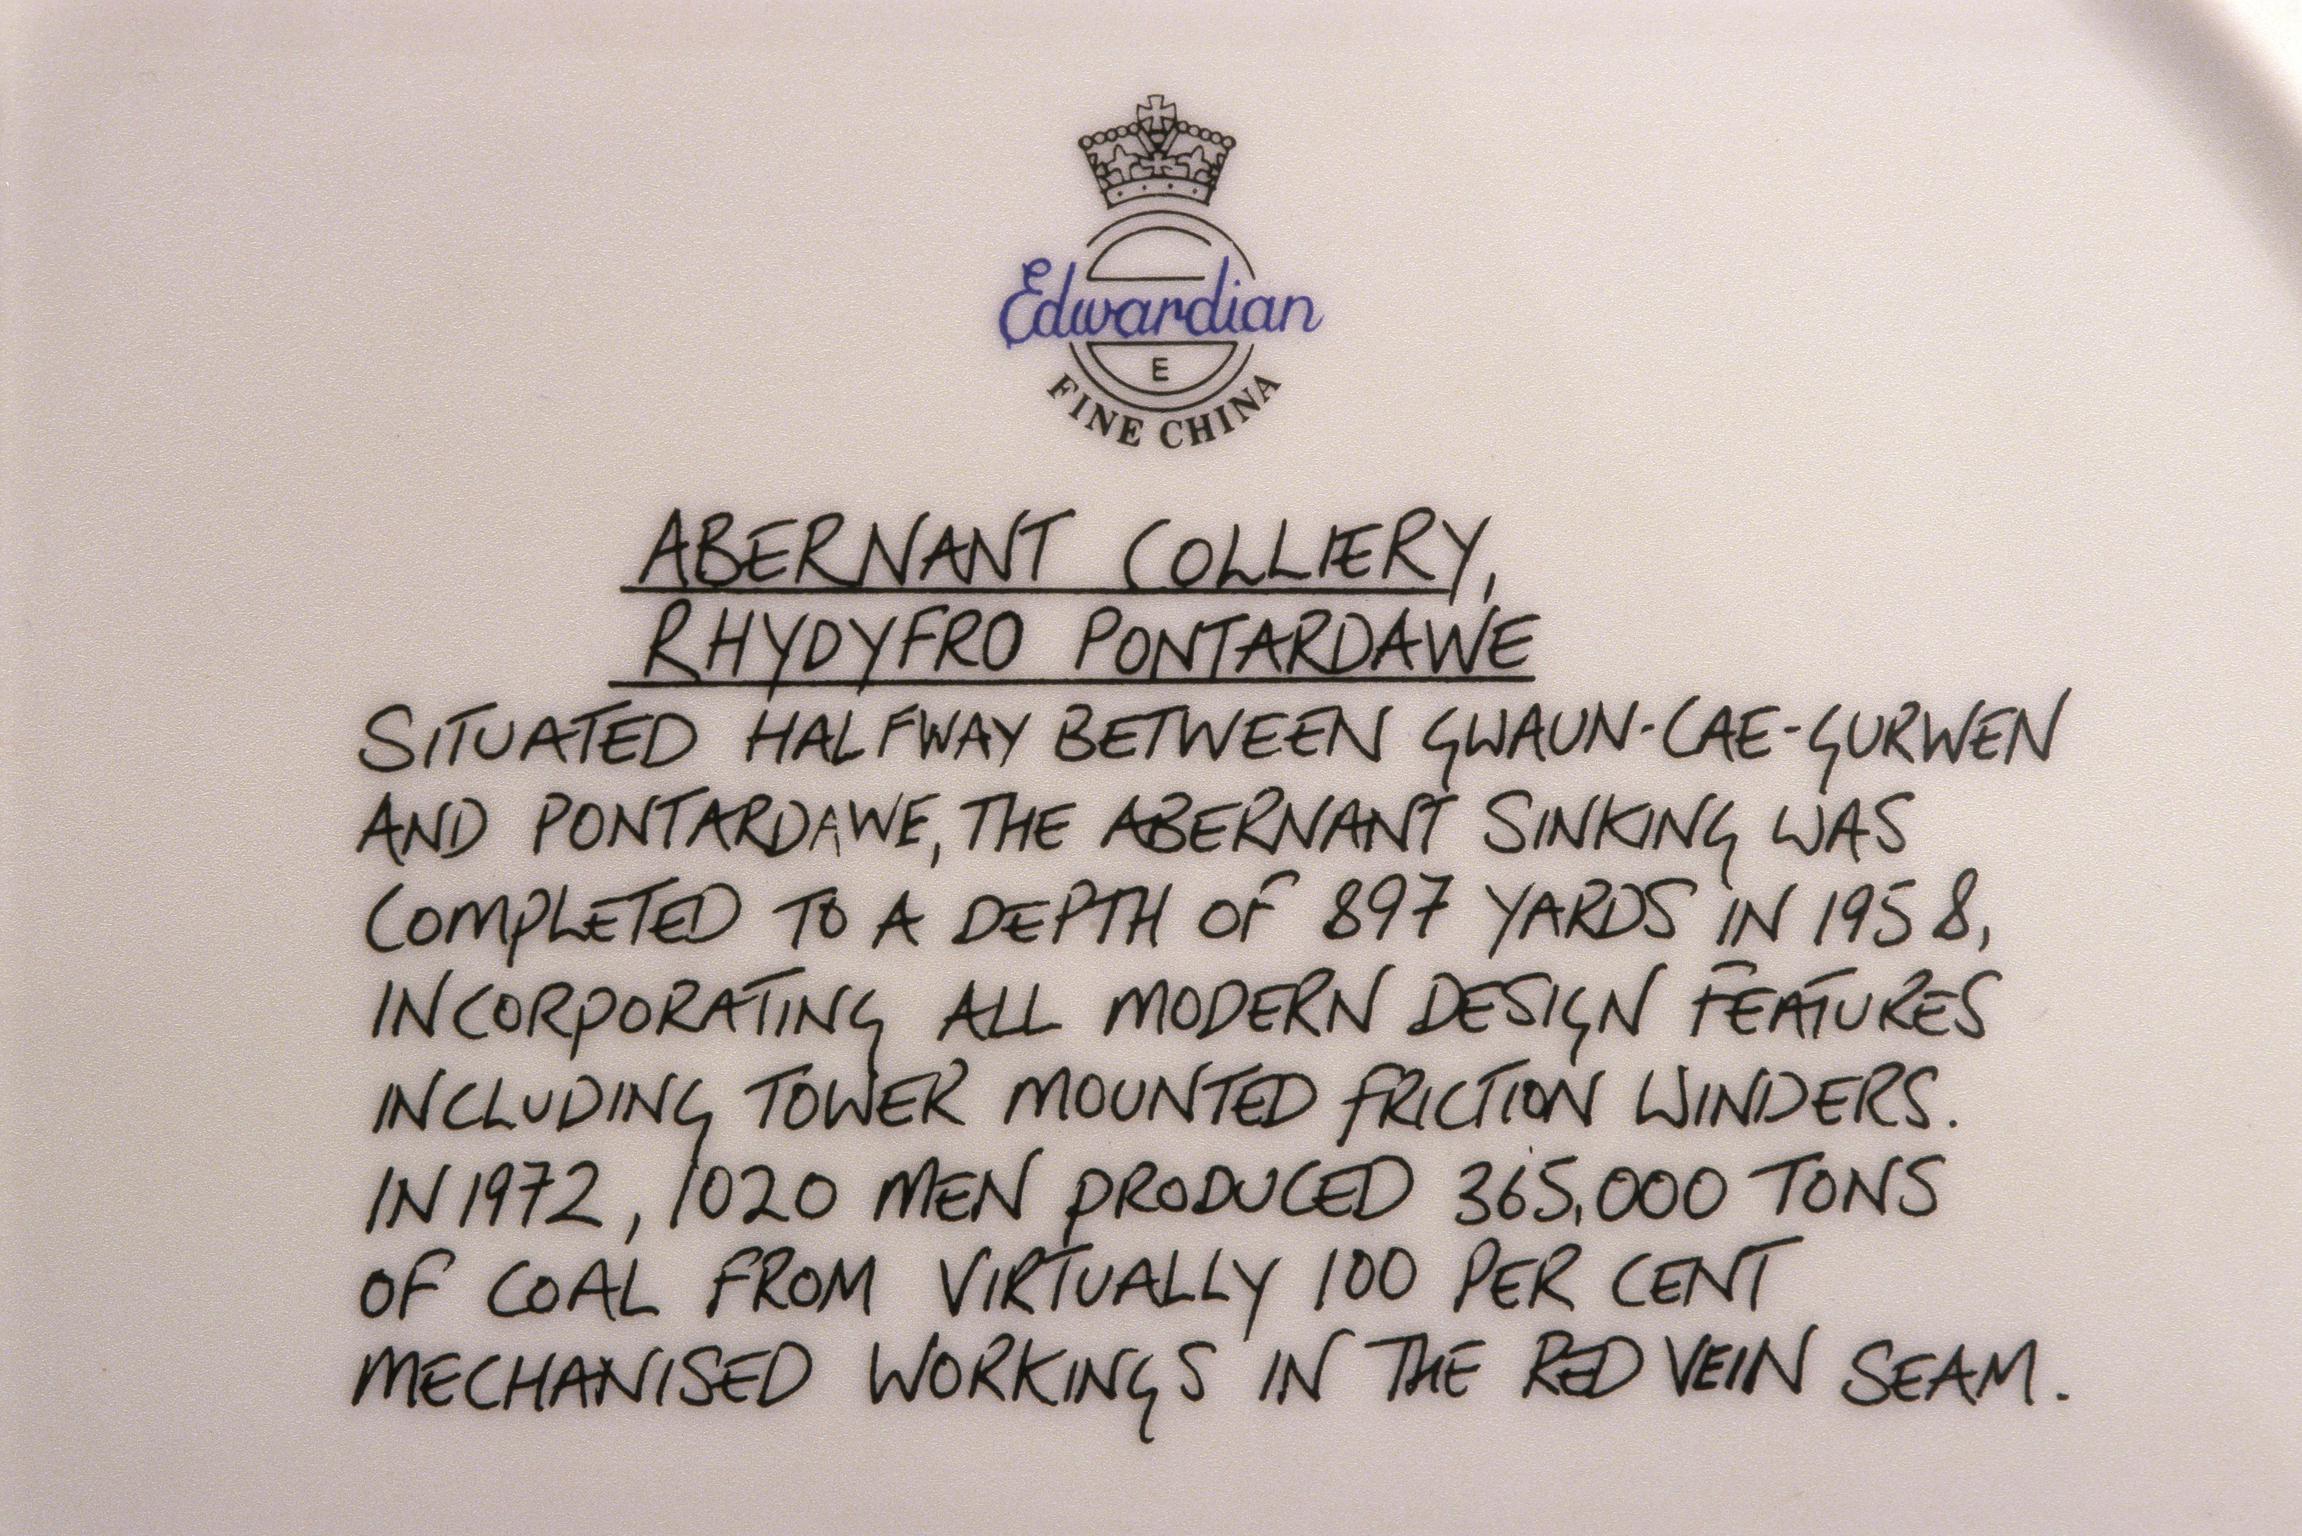 Abernant Colliery (plate)